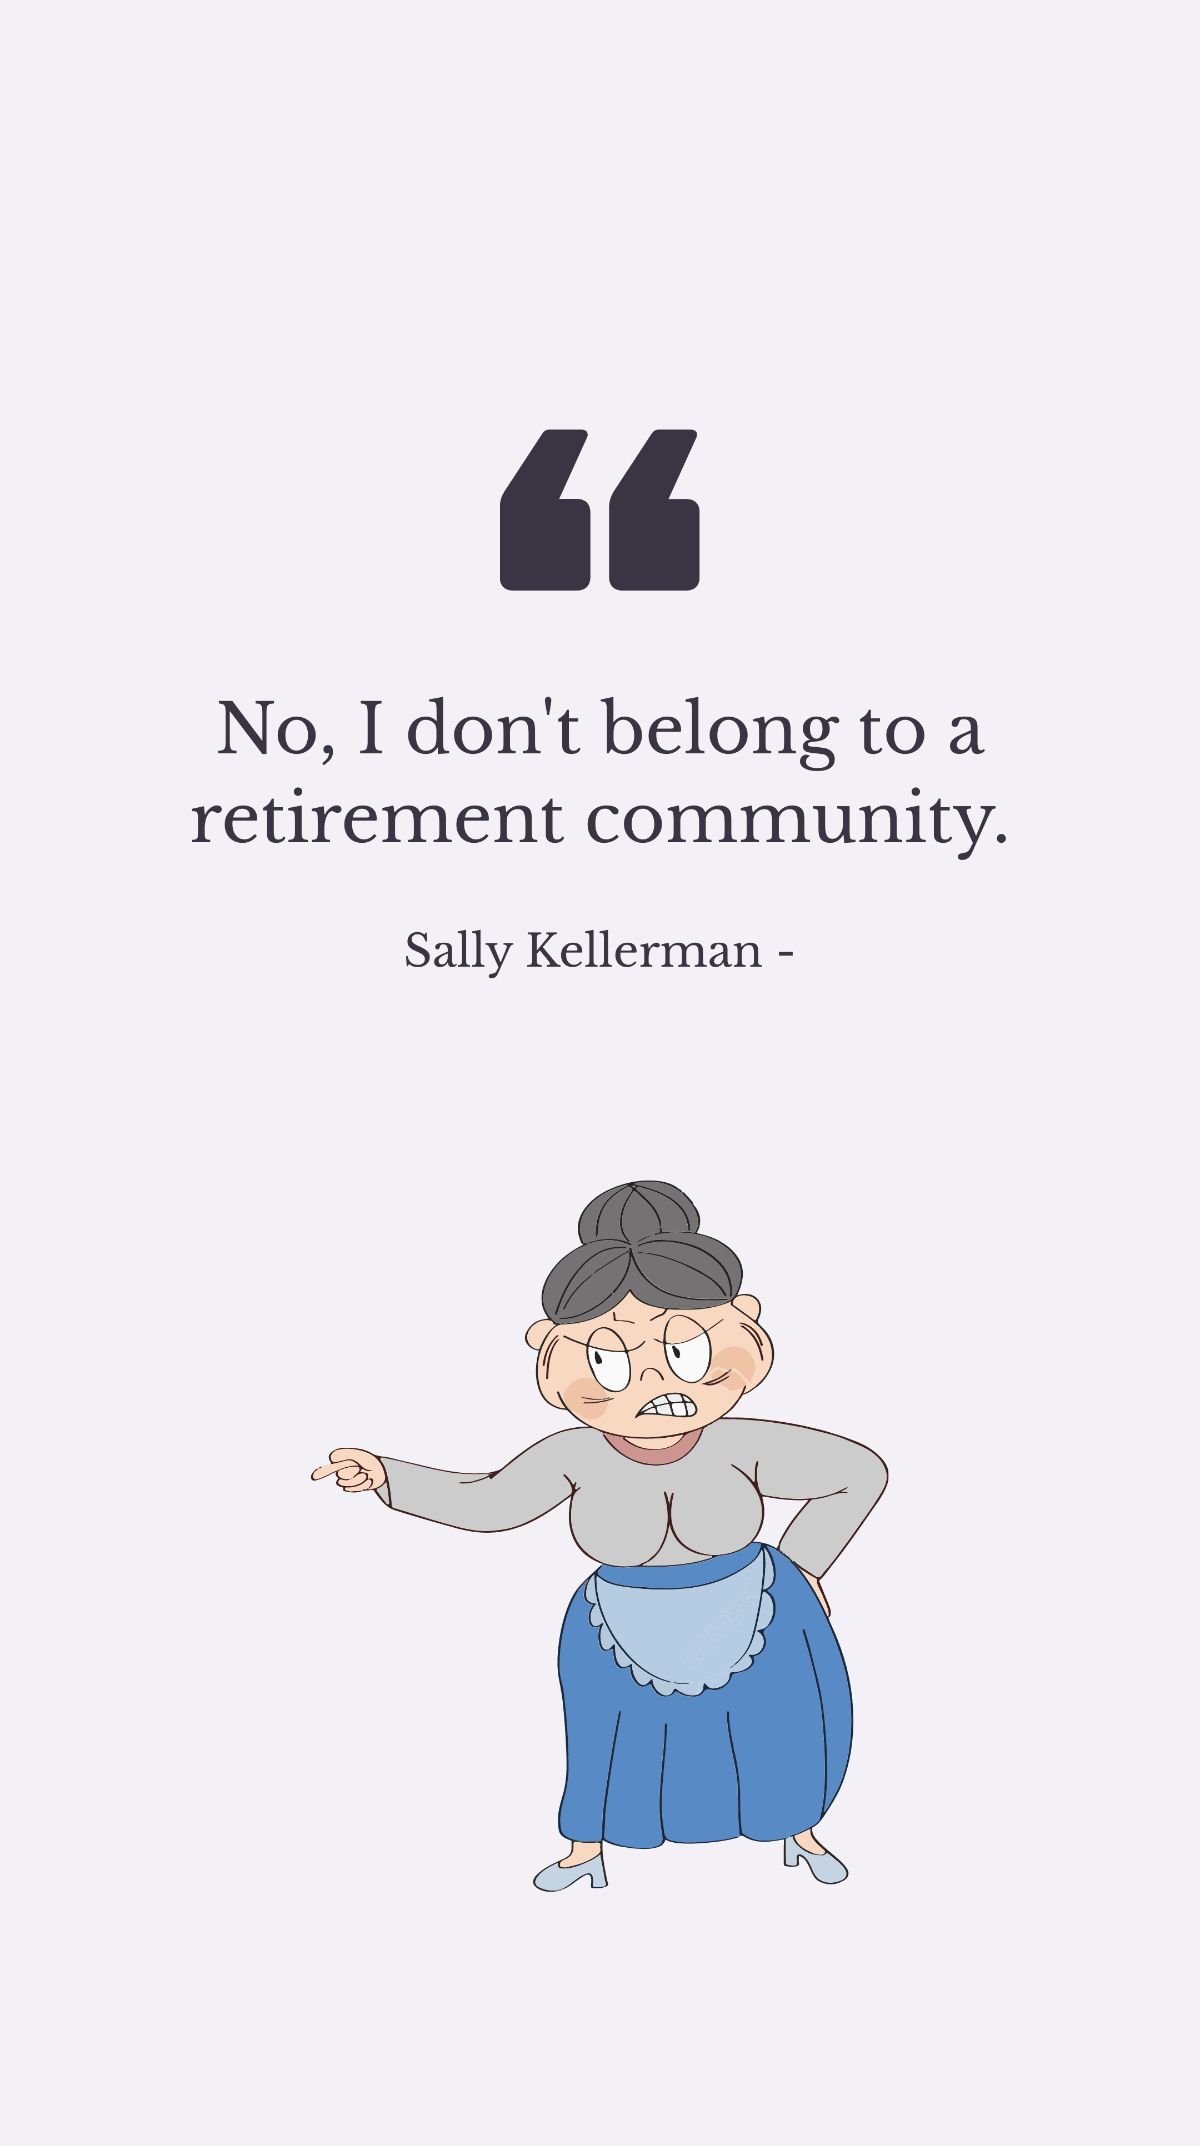 Sally Kellerman - No, I don't belong to a retirement community. Template